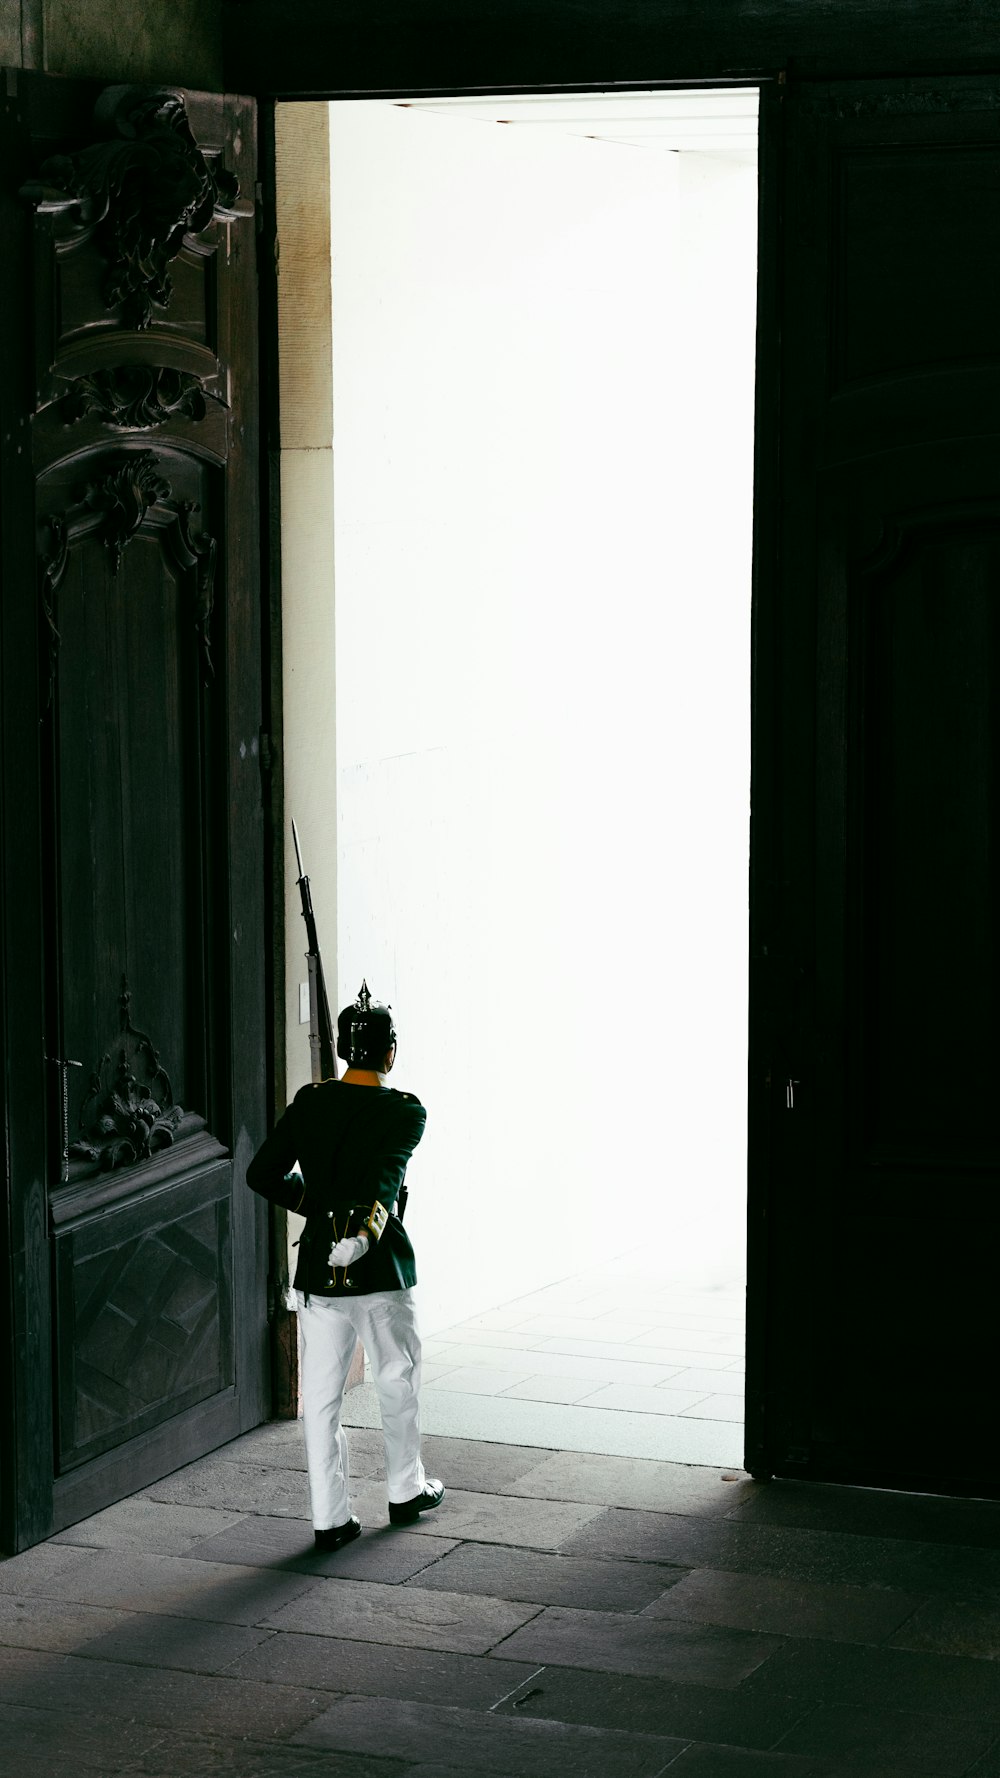 a man in a uniform standing in a doorway